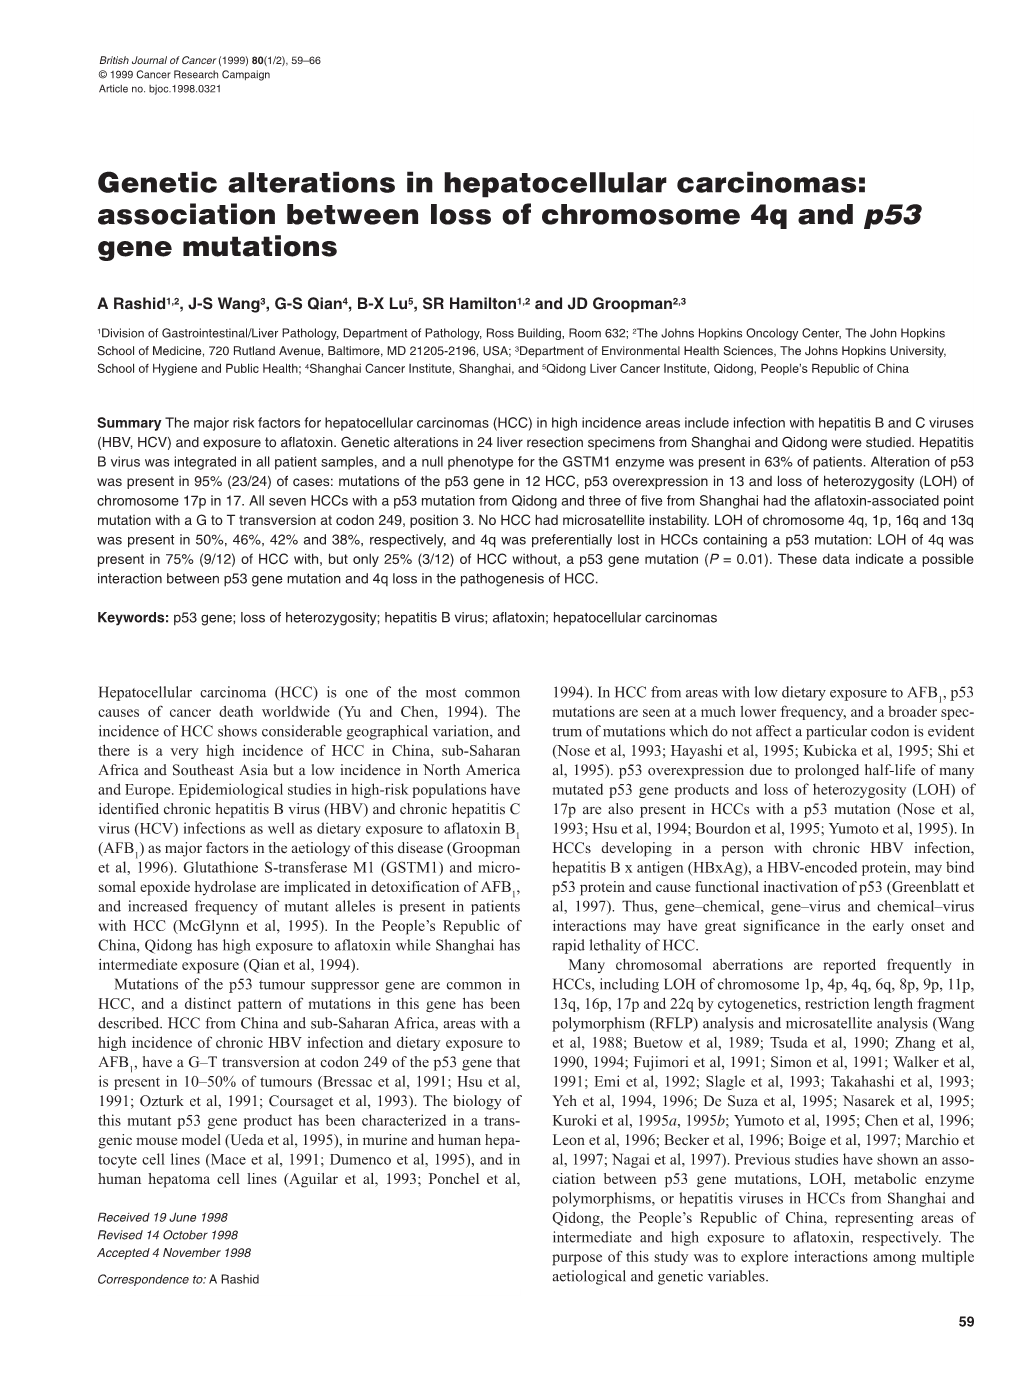 Genetic Alterations in Hepatocellular Carcinomas: Association Between